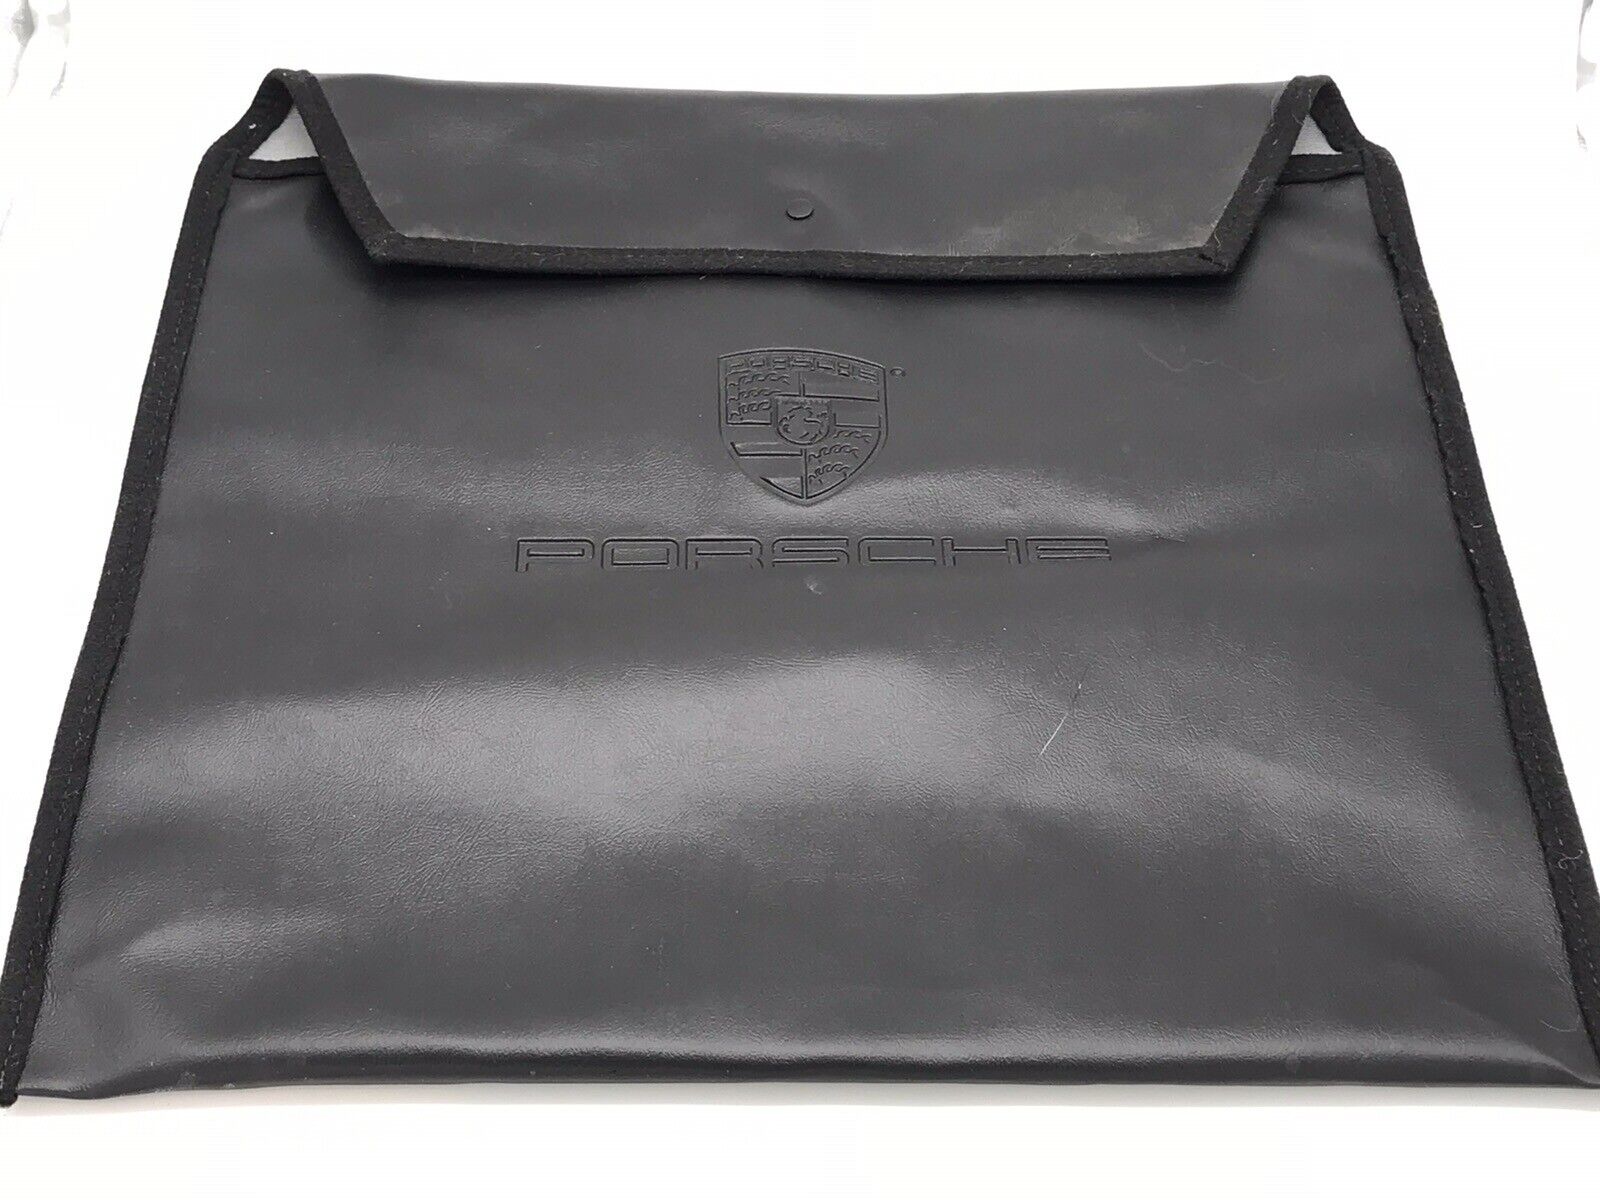 Porsche Branded Leather Portfolio Document Pouch